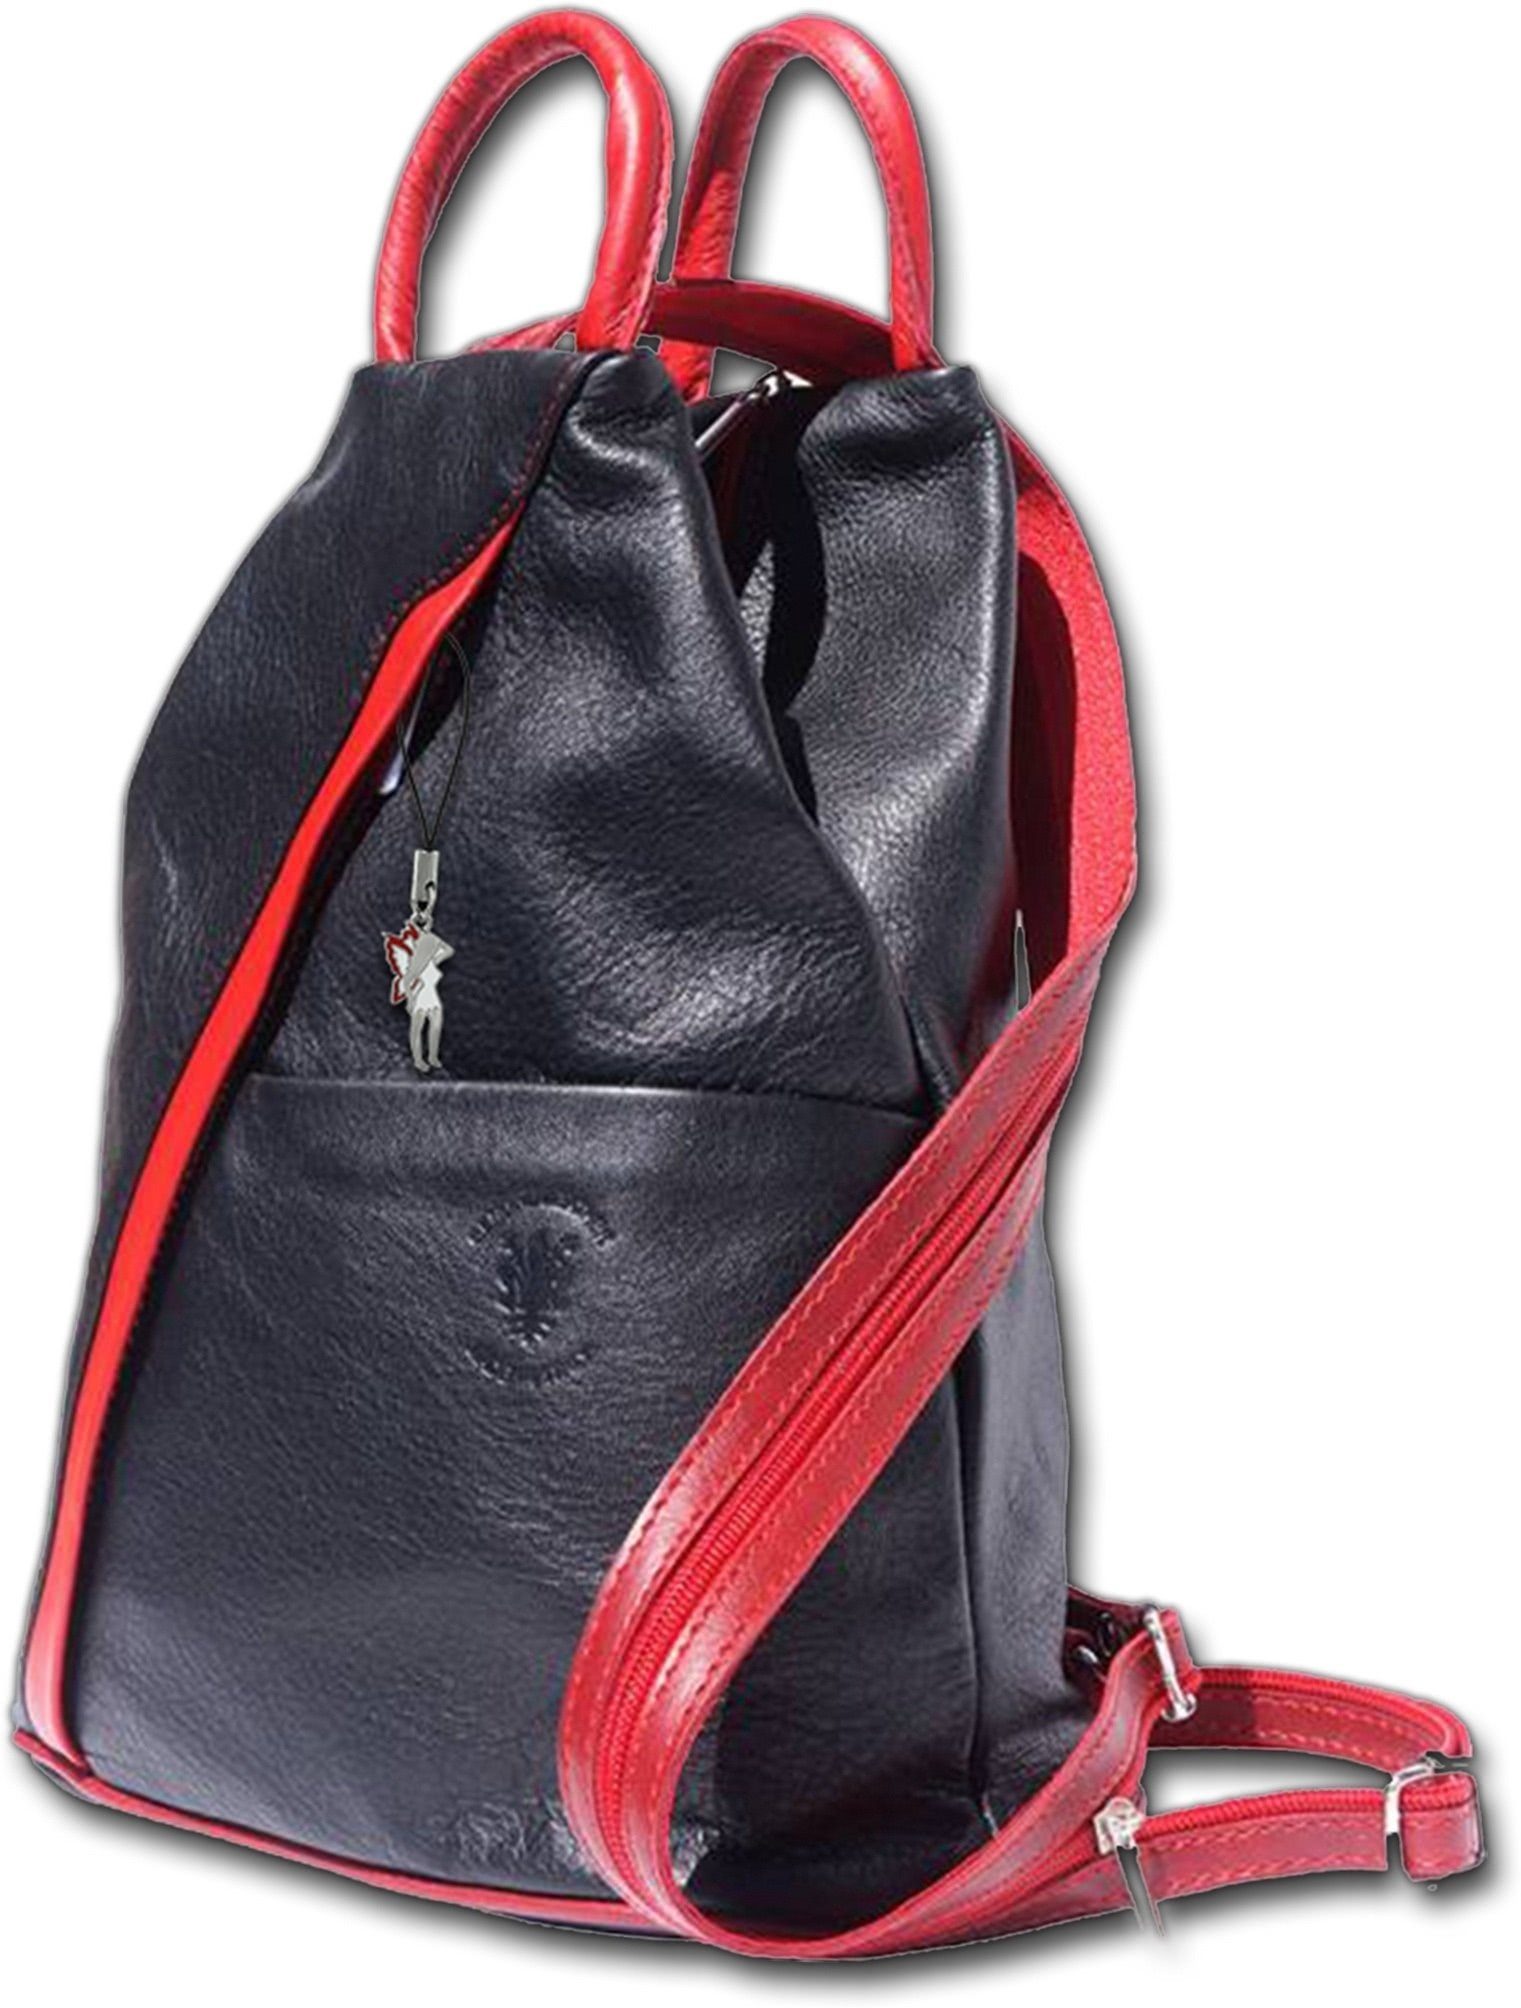 FLORENCE Cityrucksack Florence echtes Leder Damentasche (Schultertasche), Damen  Rucksack, Tasche Echtleder schwarz, rot, Made-In Italy